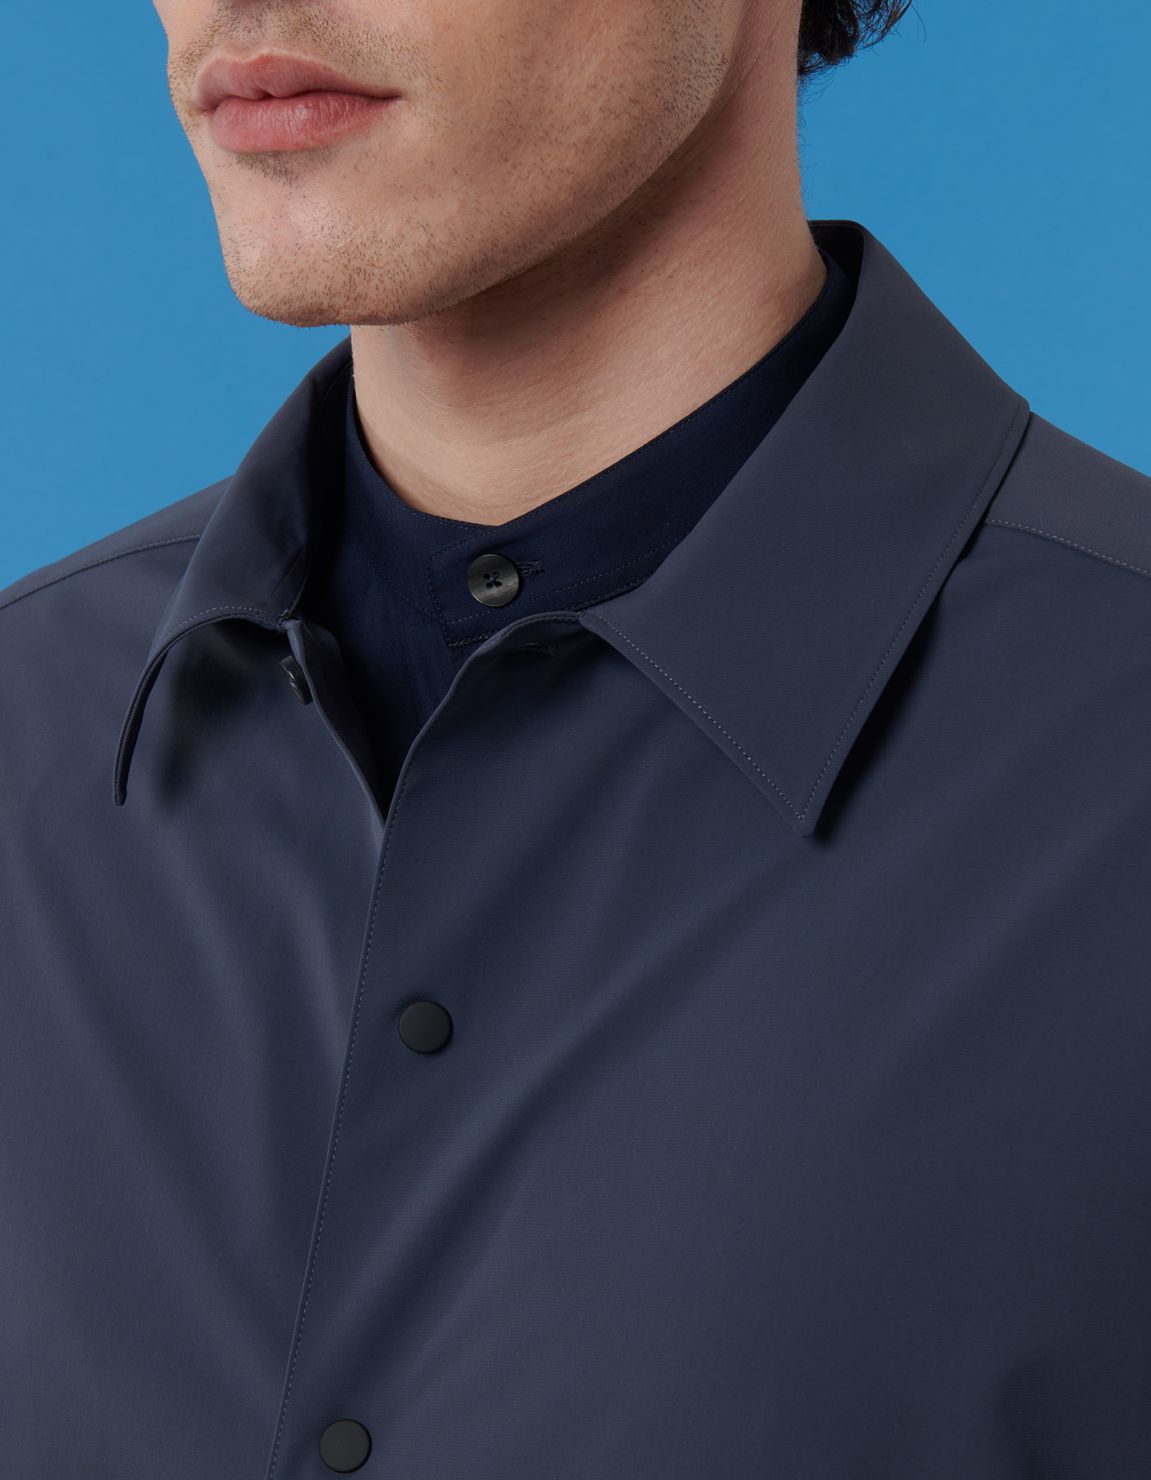 Dark Grey Textured Solid colour Shirt Collar spread Over 2